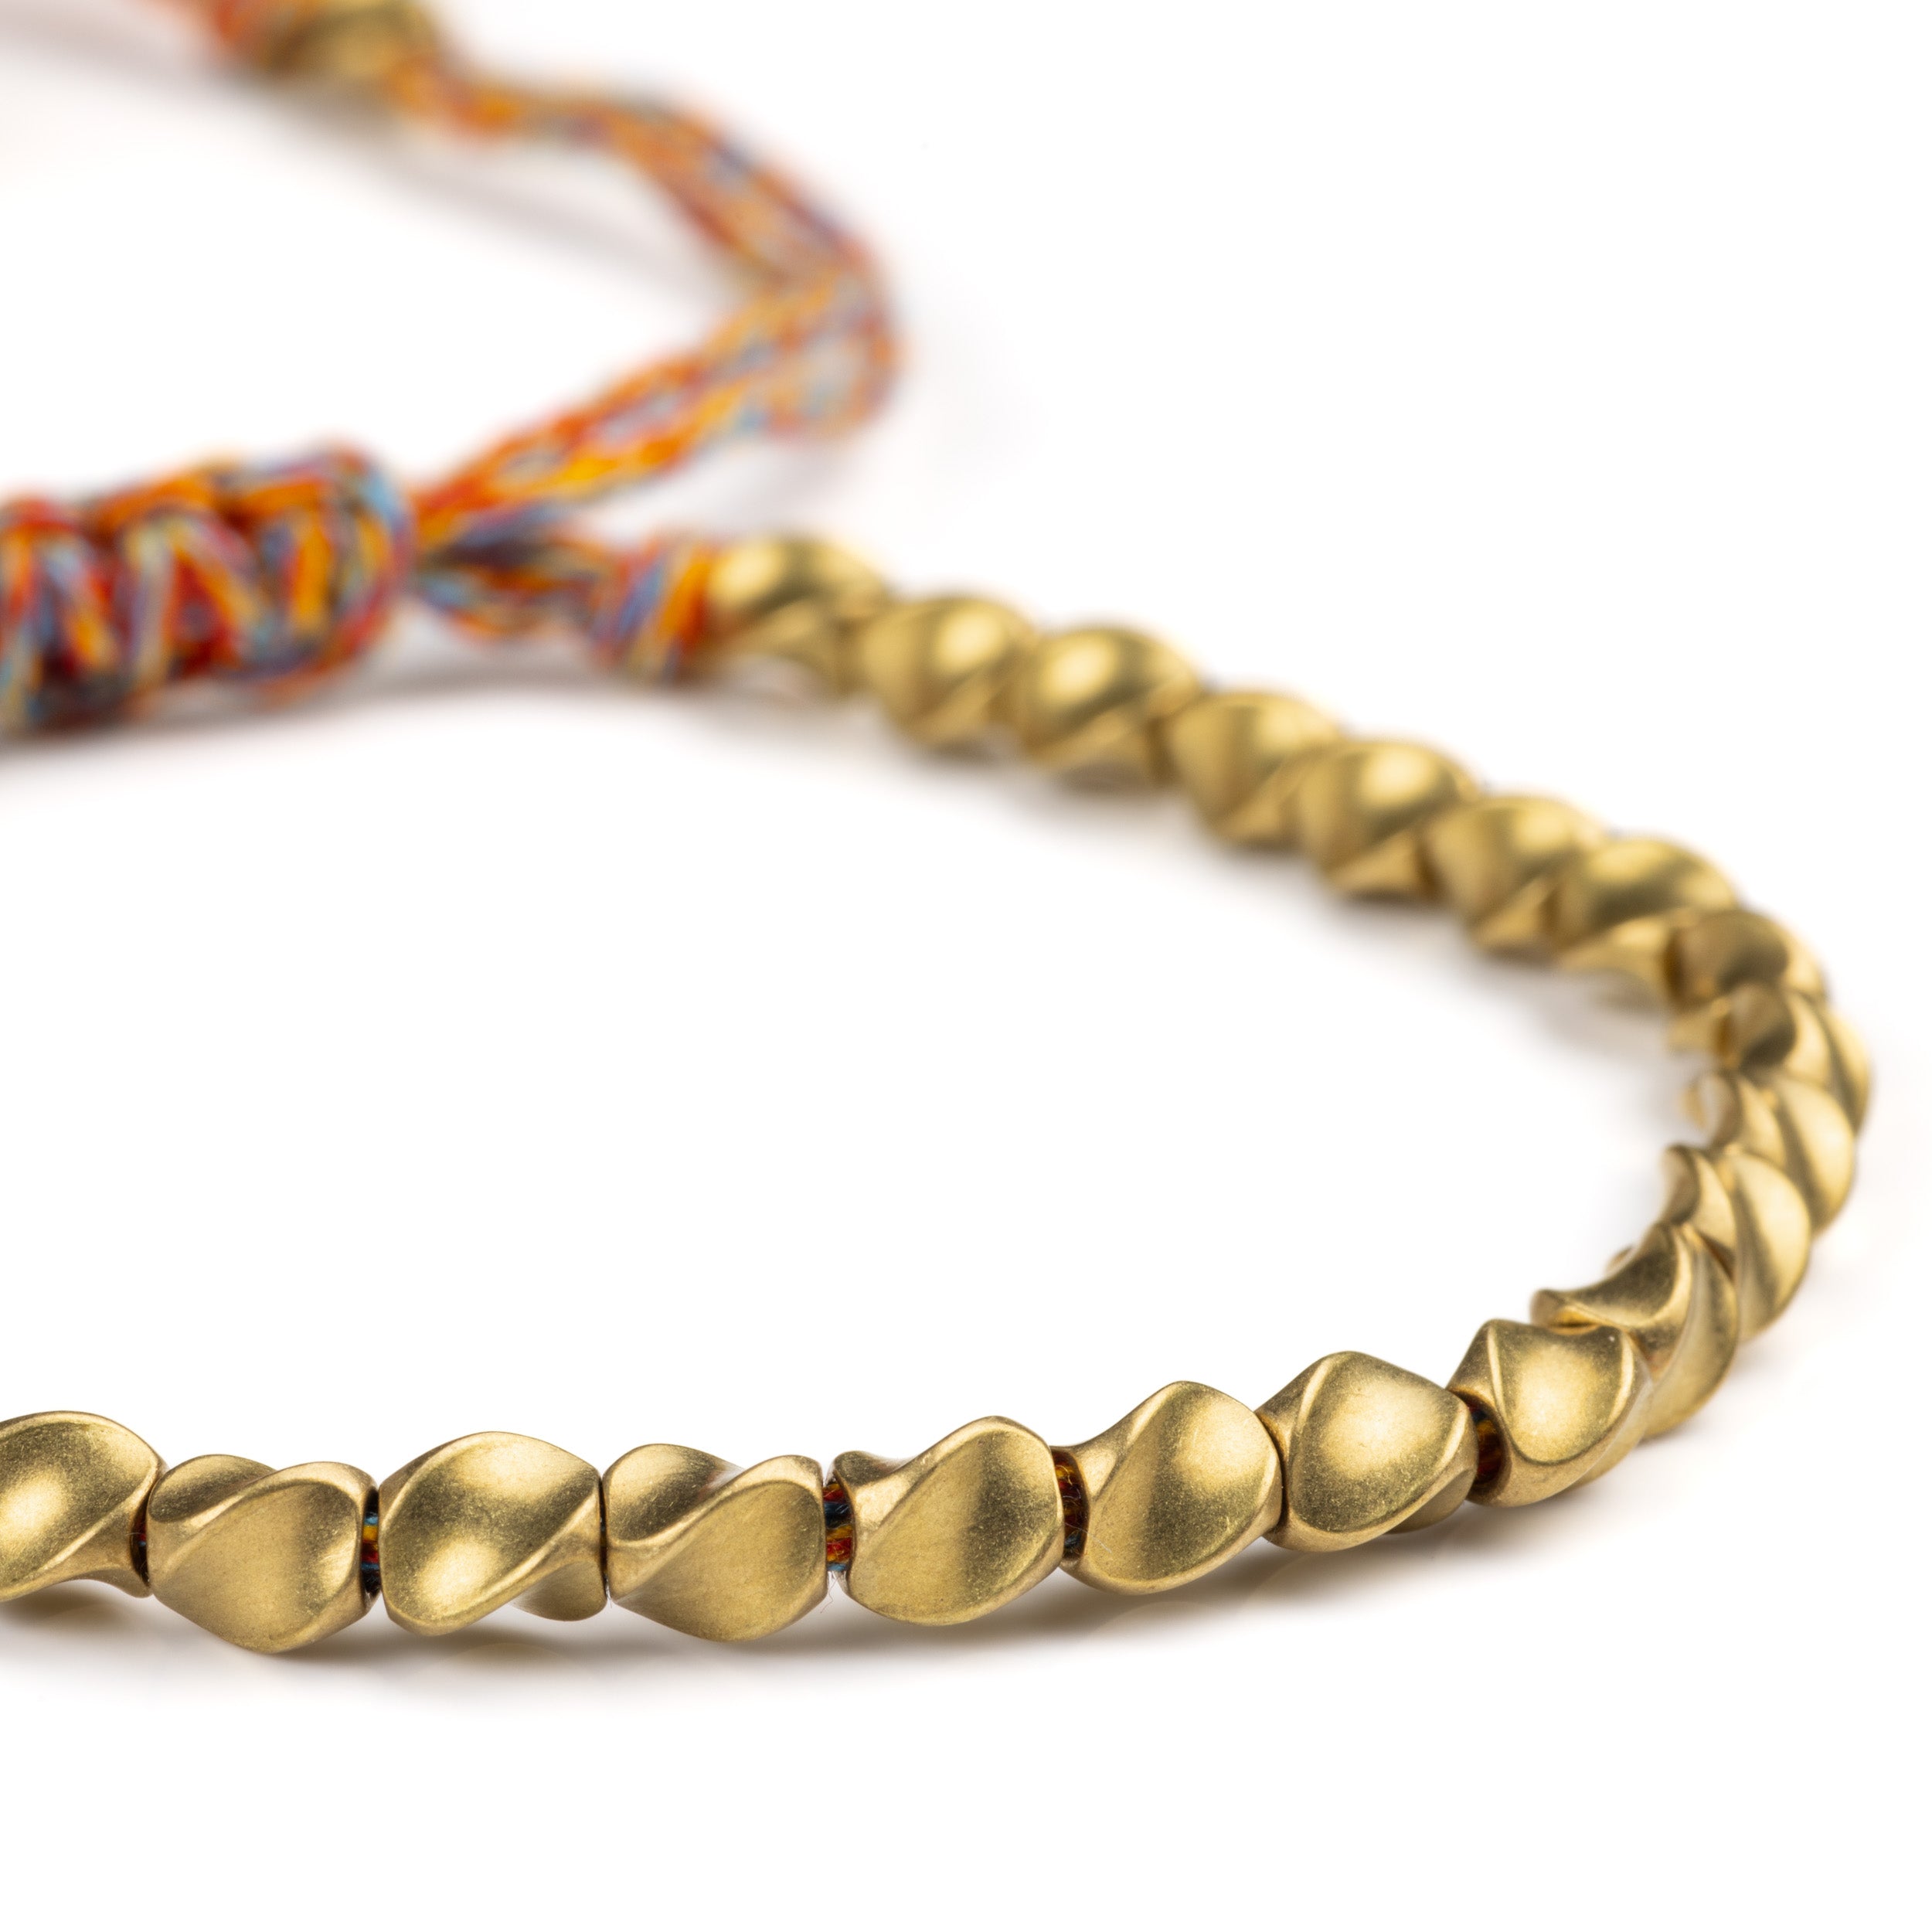 Tibetan Copper Bracelet - Healing, Protection